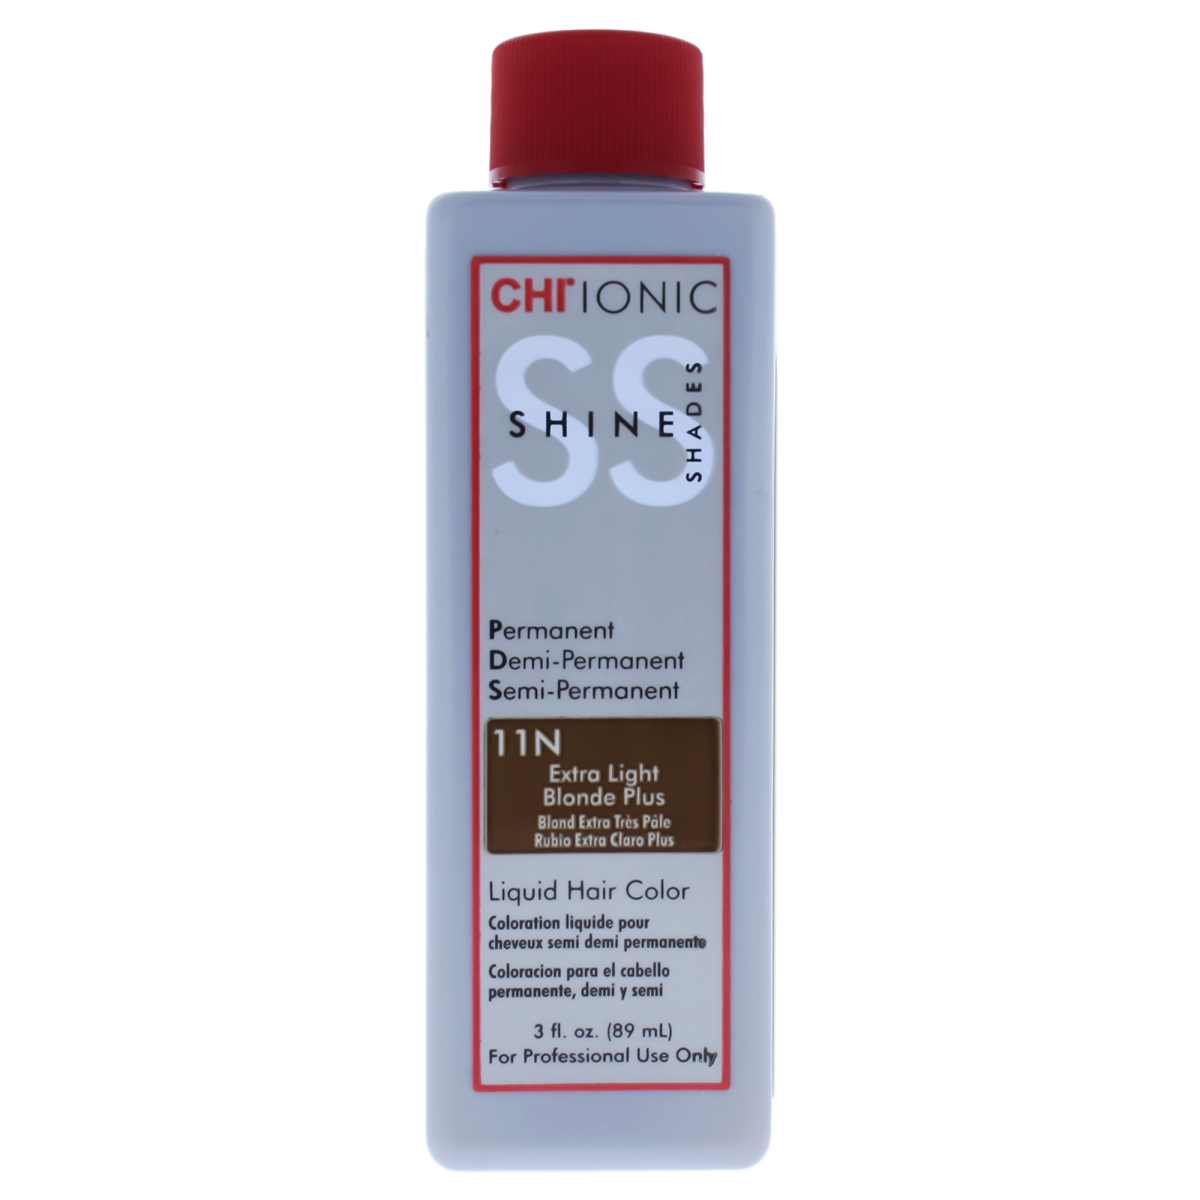 I0084003 Ionic Shine Shades Liquid Hair Color For Unisex - 11n Extra Light Blonde Plus - 3 Oz